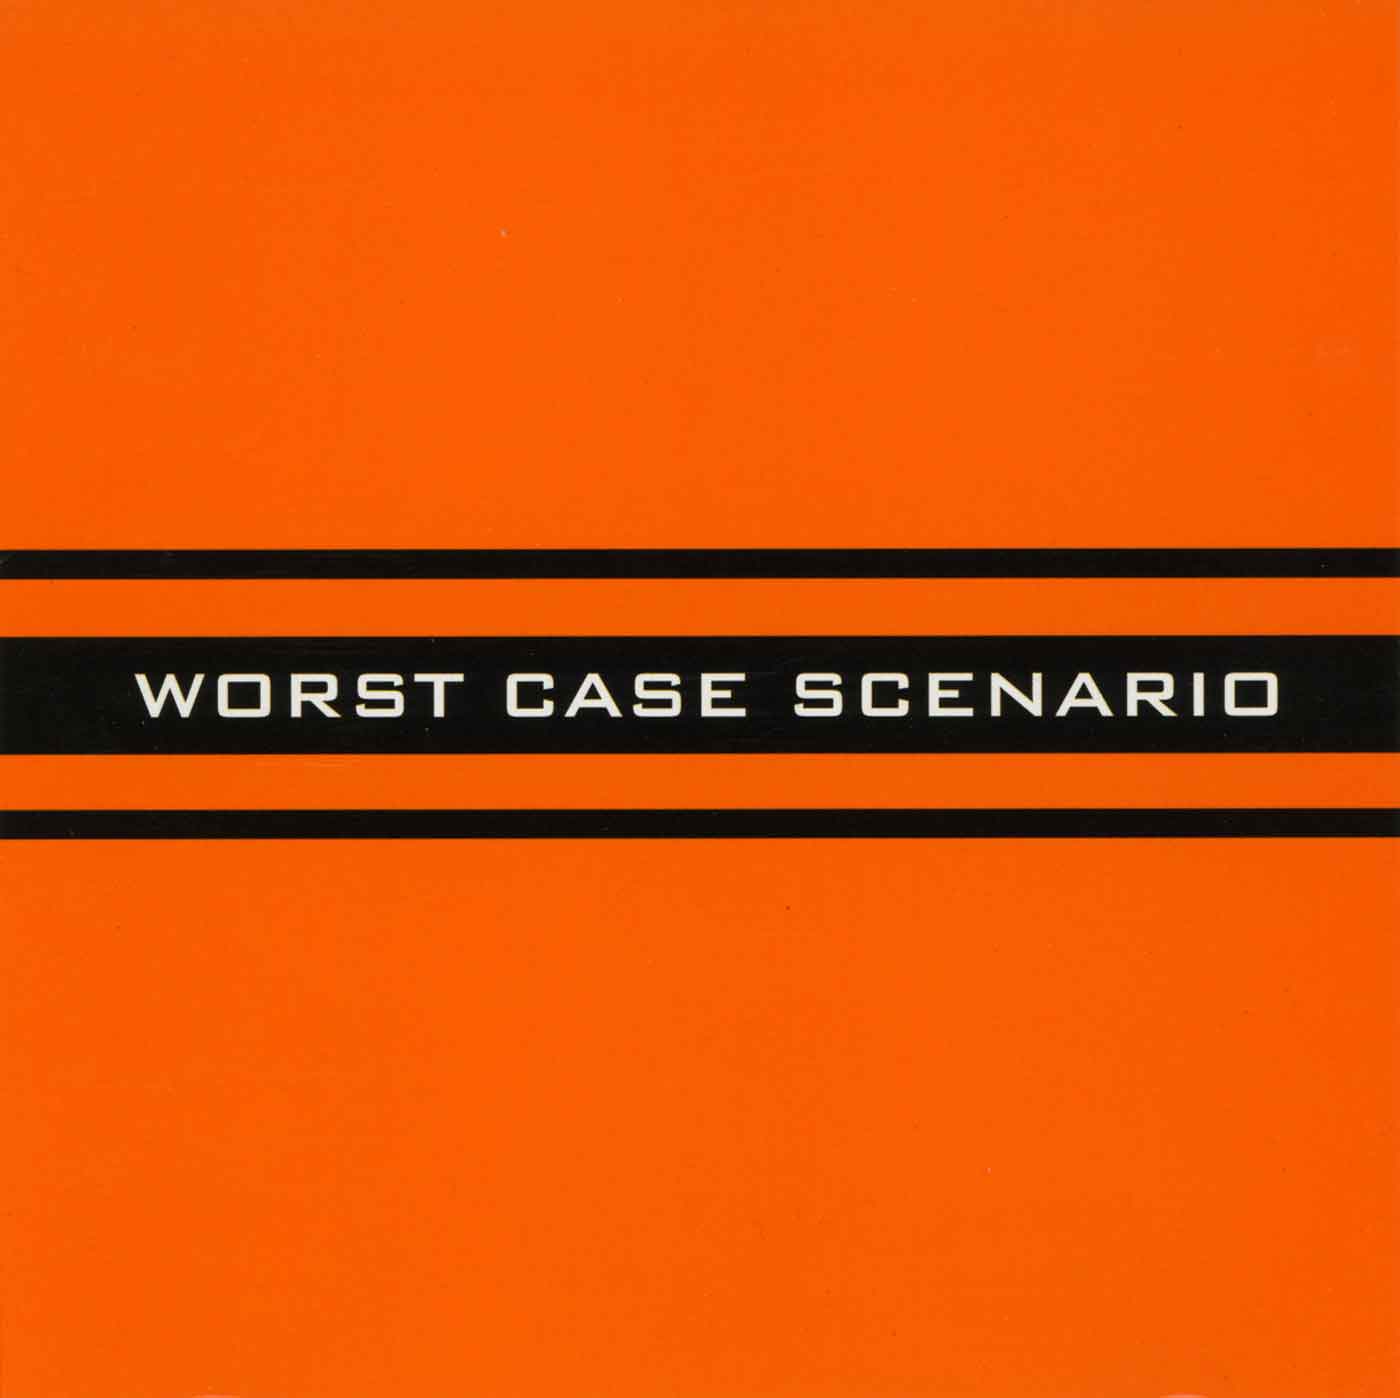 Worst Case Scenario - The Complete Works CD - Monoroid